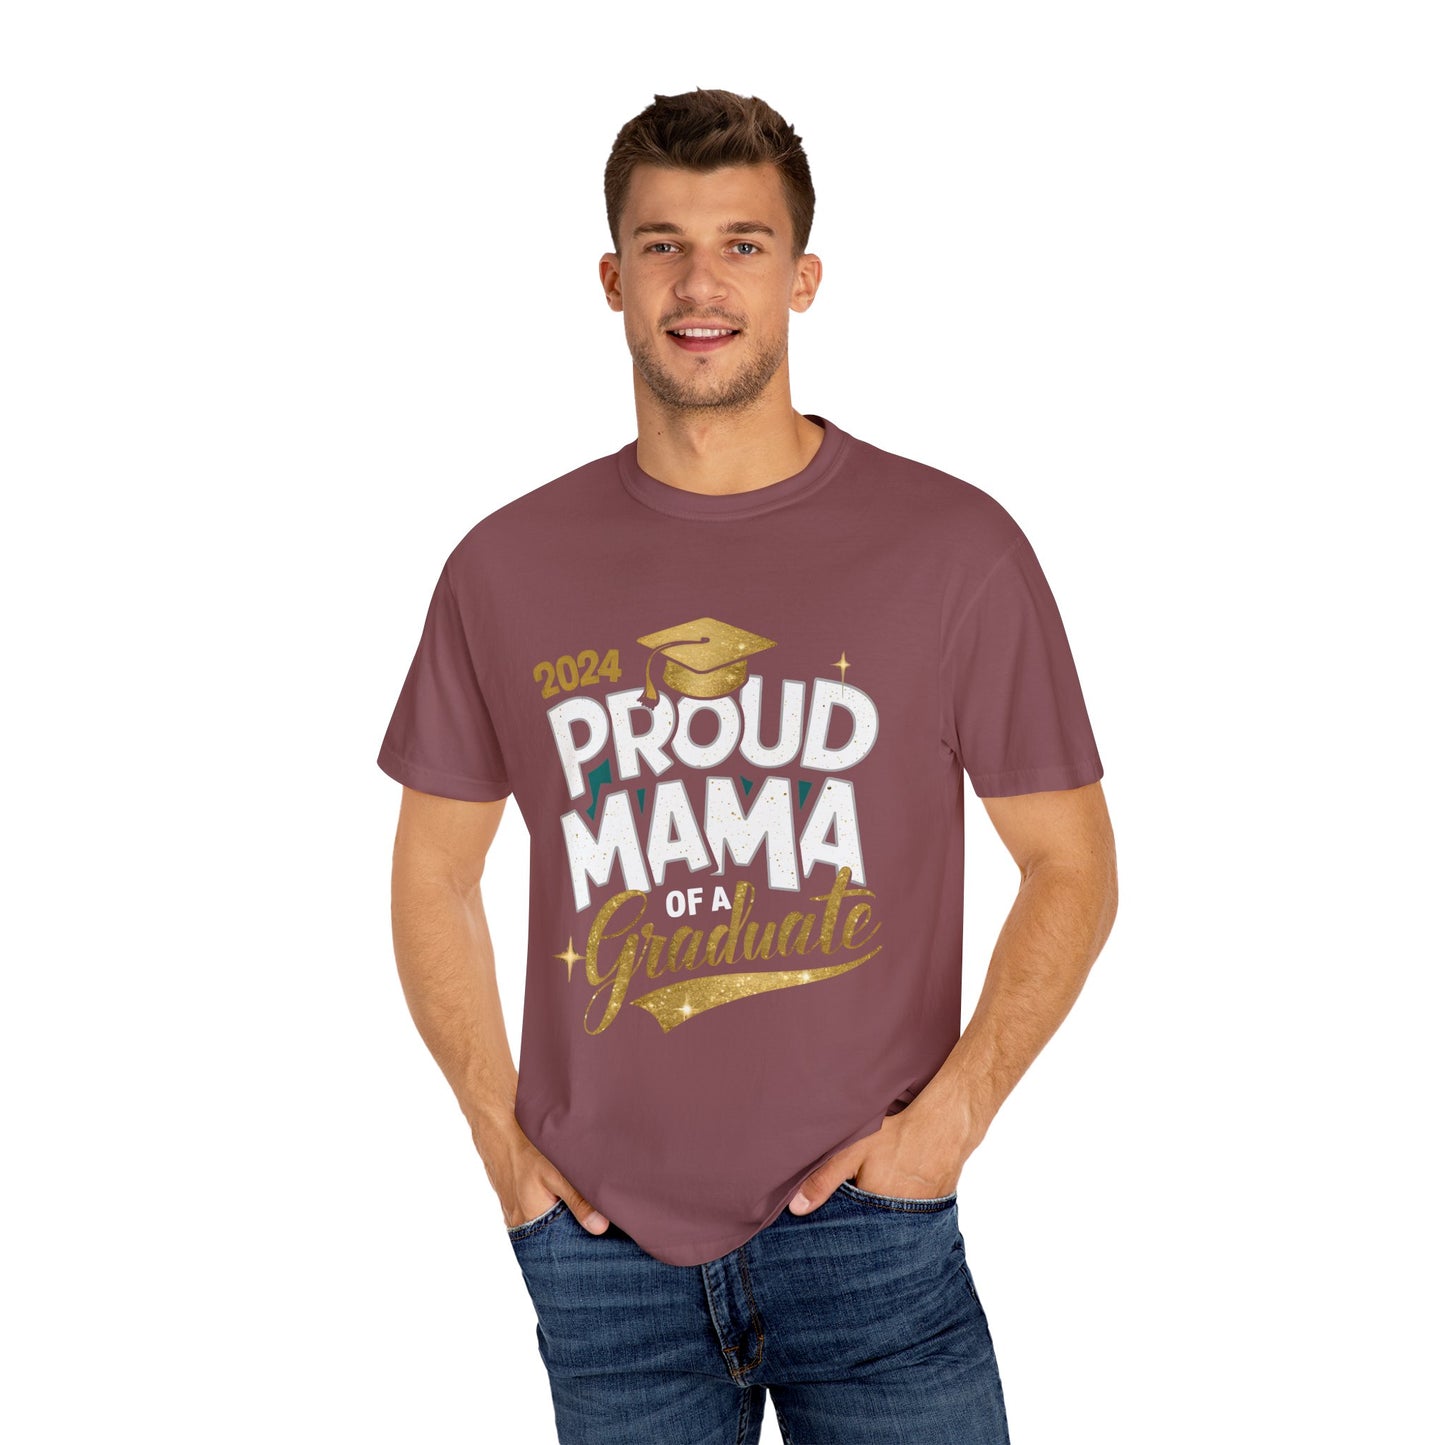 Proud Mama of a 2024 Graduate Unisex Garment-dyed T-shirt Cotton Funny Humorous Graphic Soft Premium Unisex Men Women Brick T-shirt Birthday Gift-30